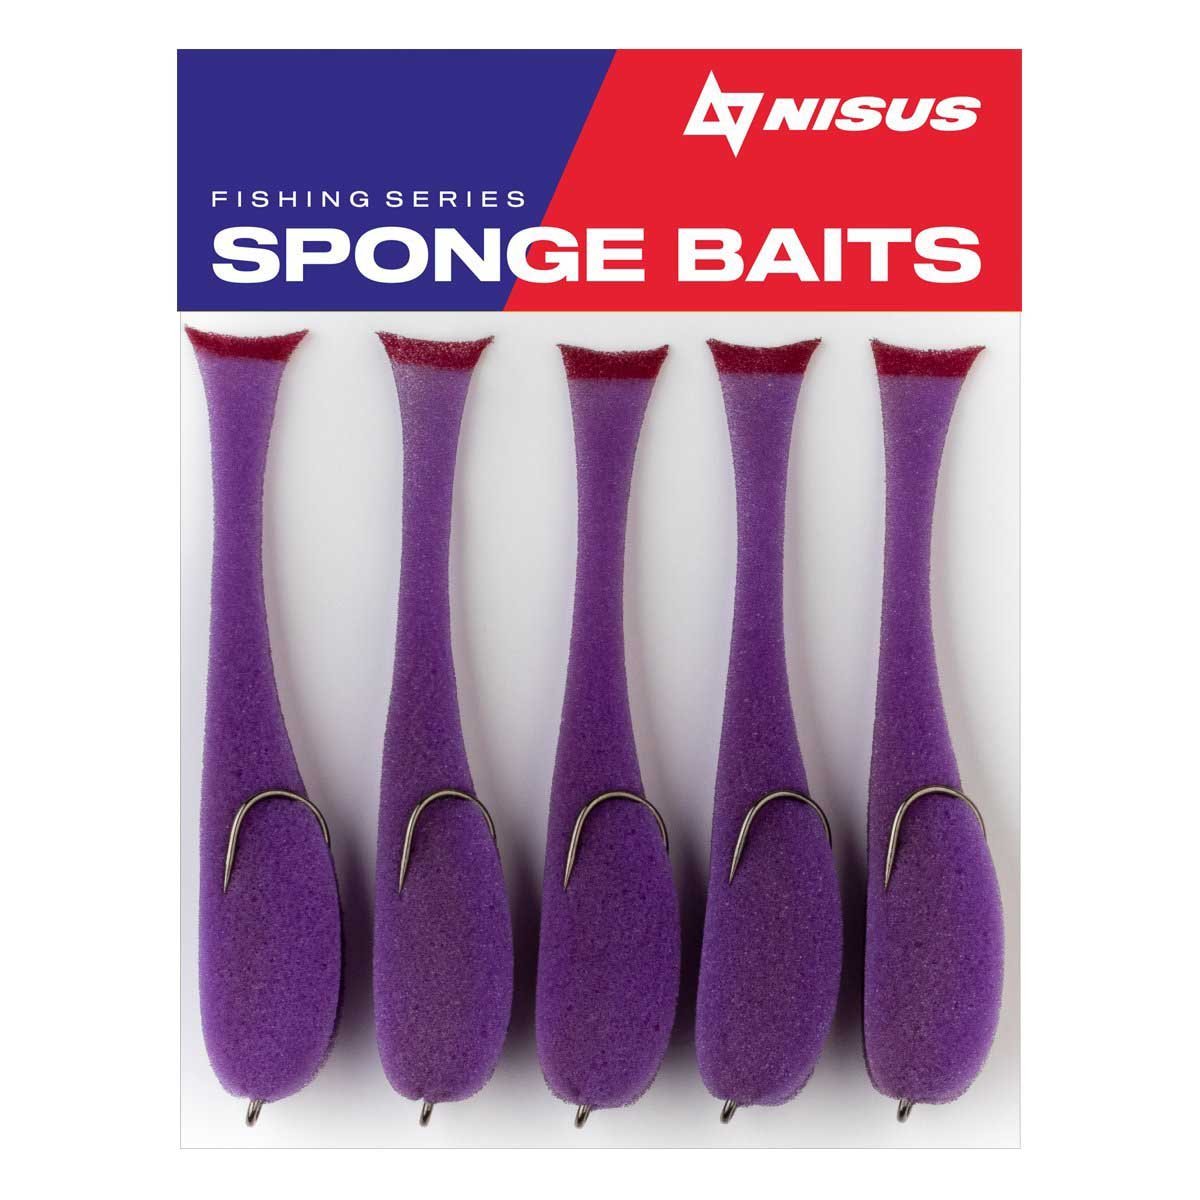 Nisus 3.5 inch Sponge Bait Fishing Lure, pack of 5